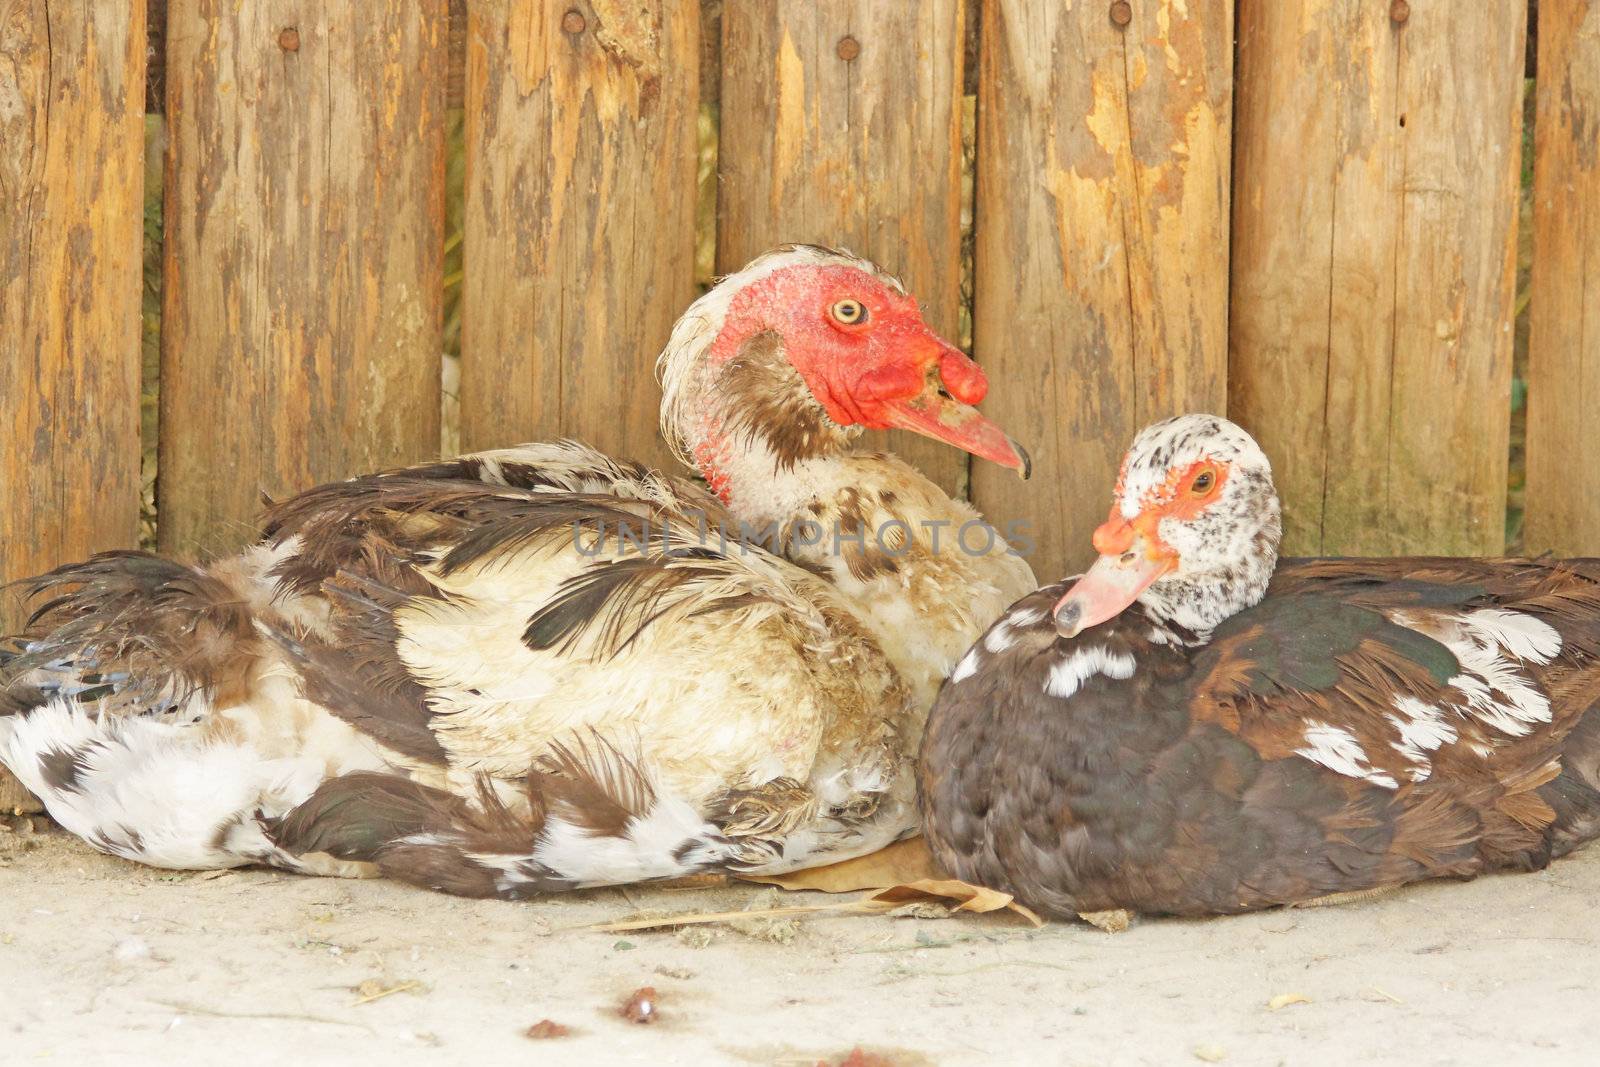 Turkey ducks by Lessadar